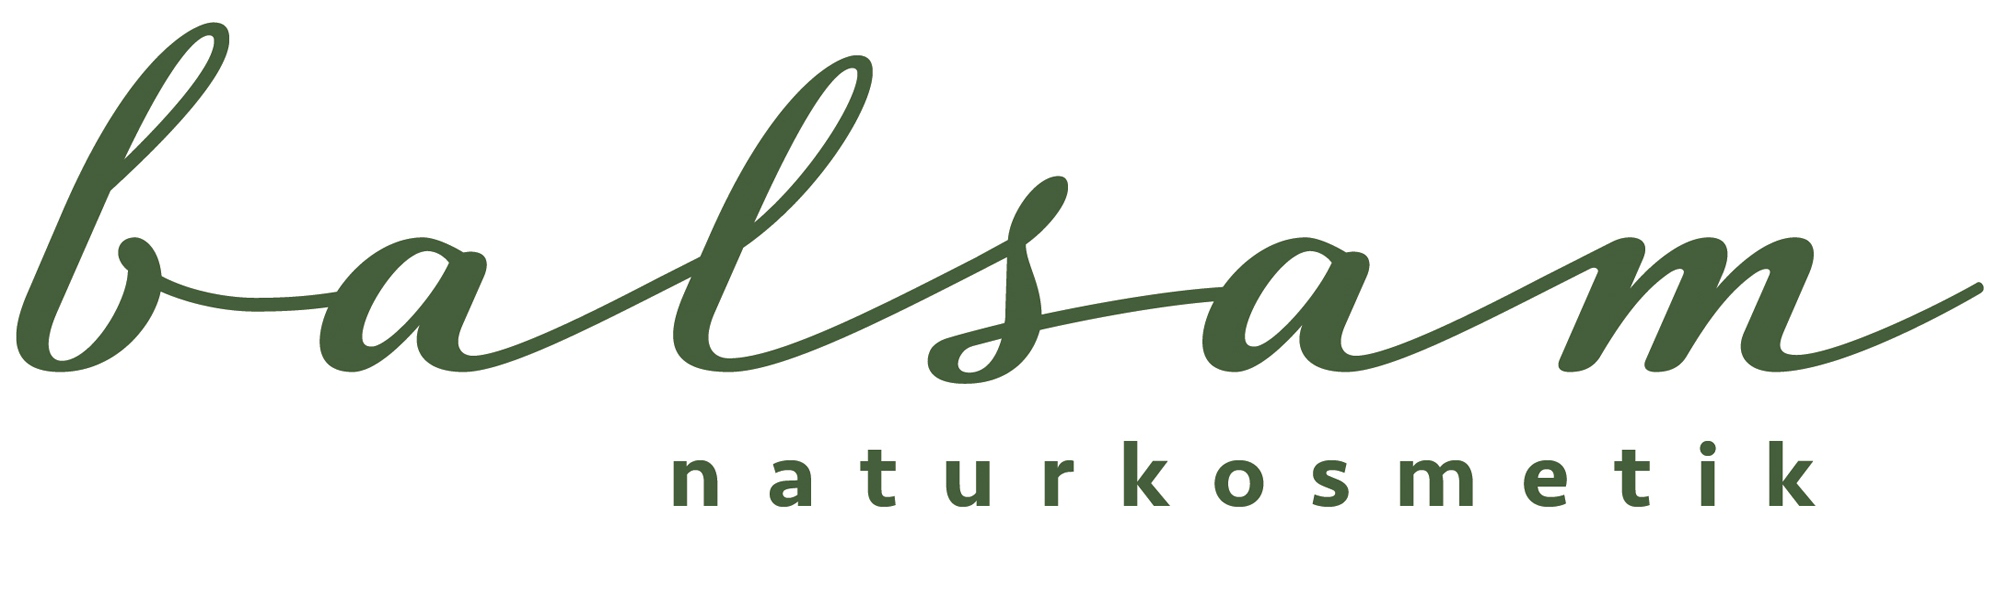 Naturkosmetik Tirol Partnerprogramm